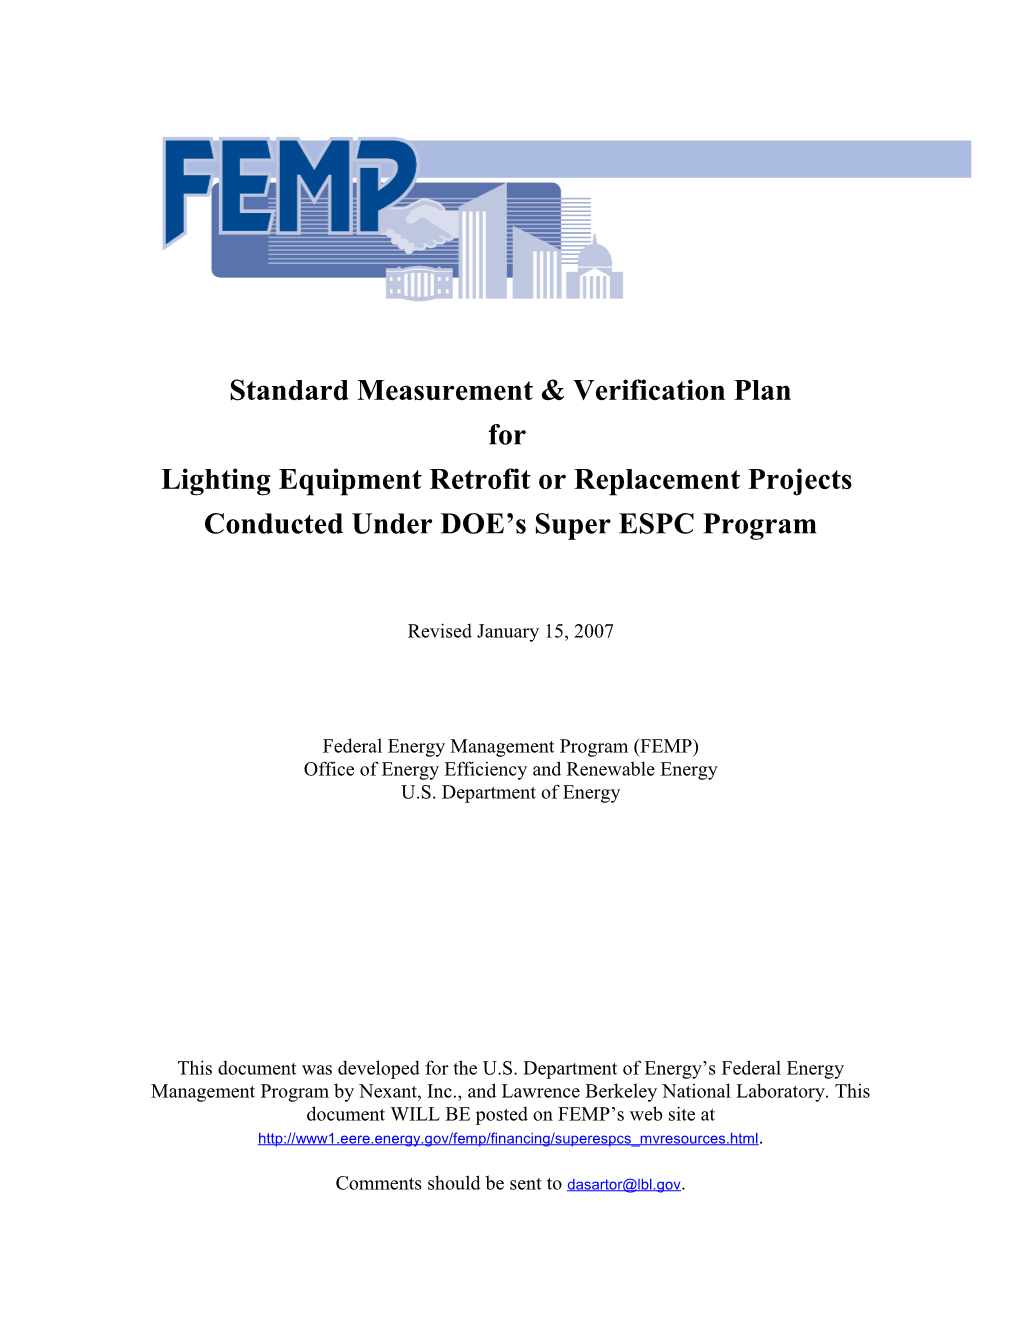 Federal Energy Management Program (FEMP)